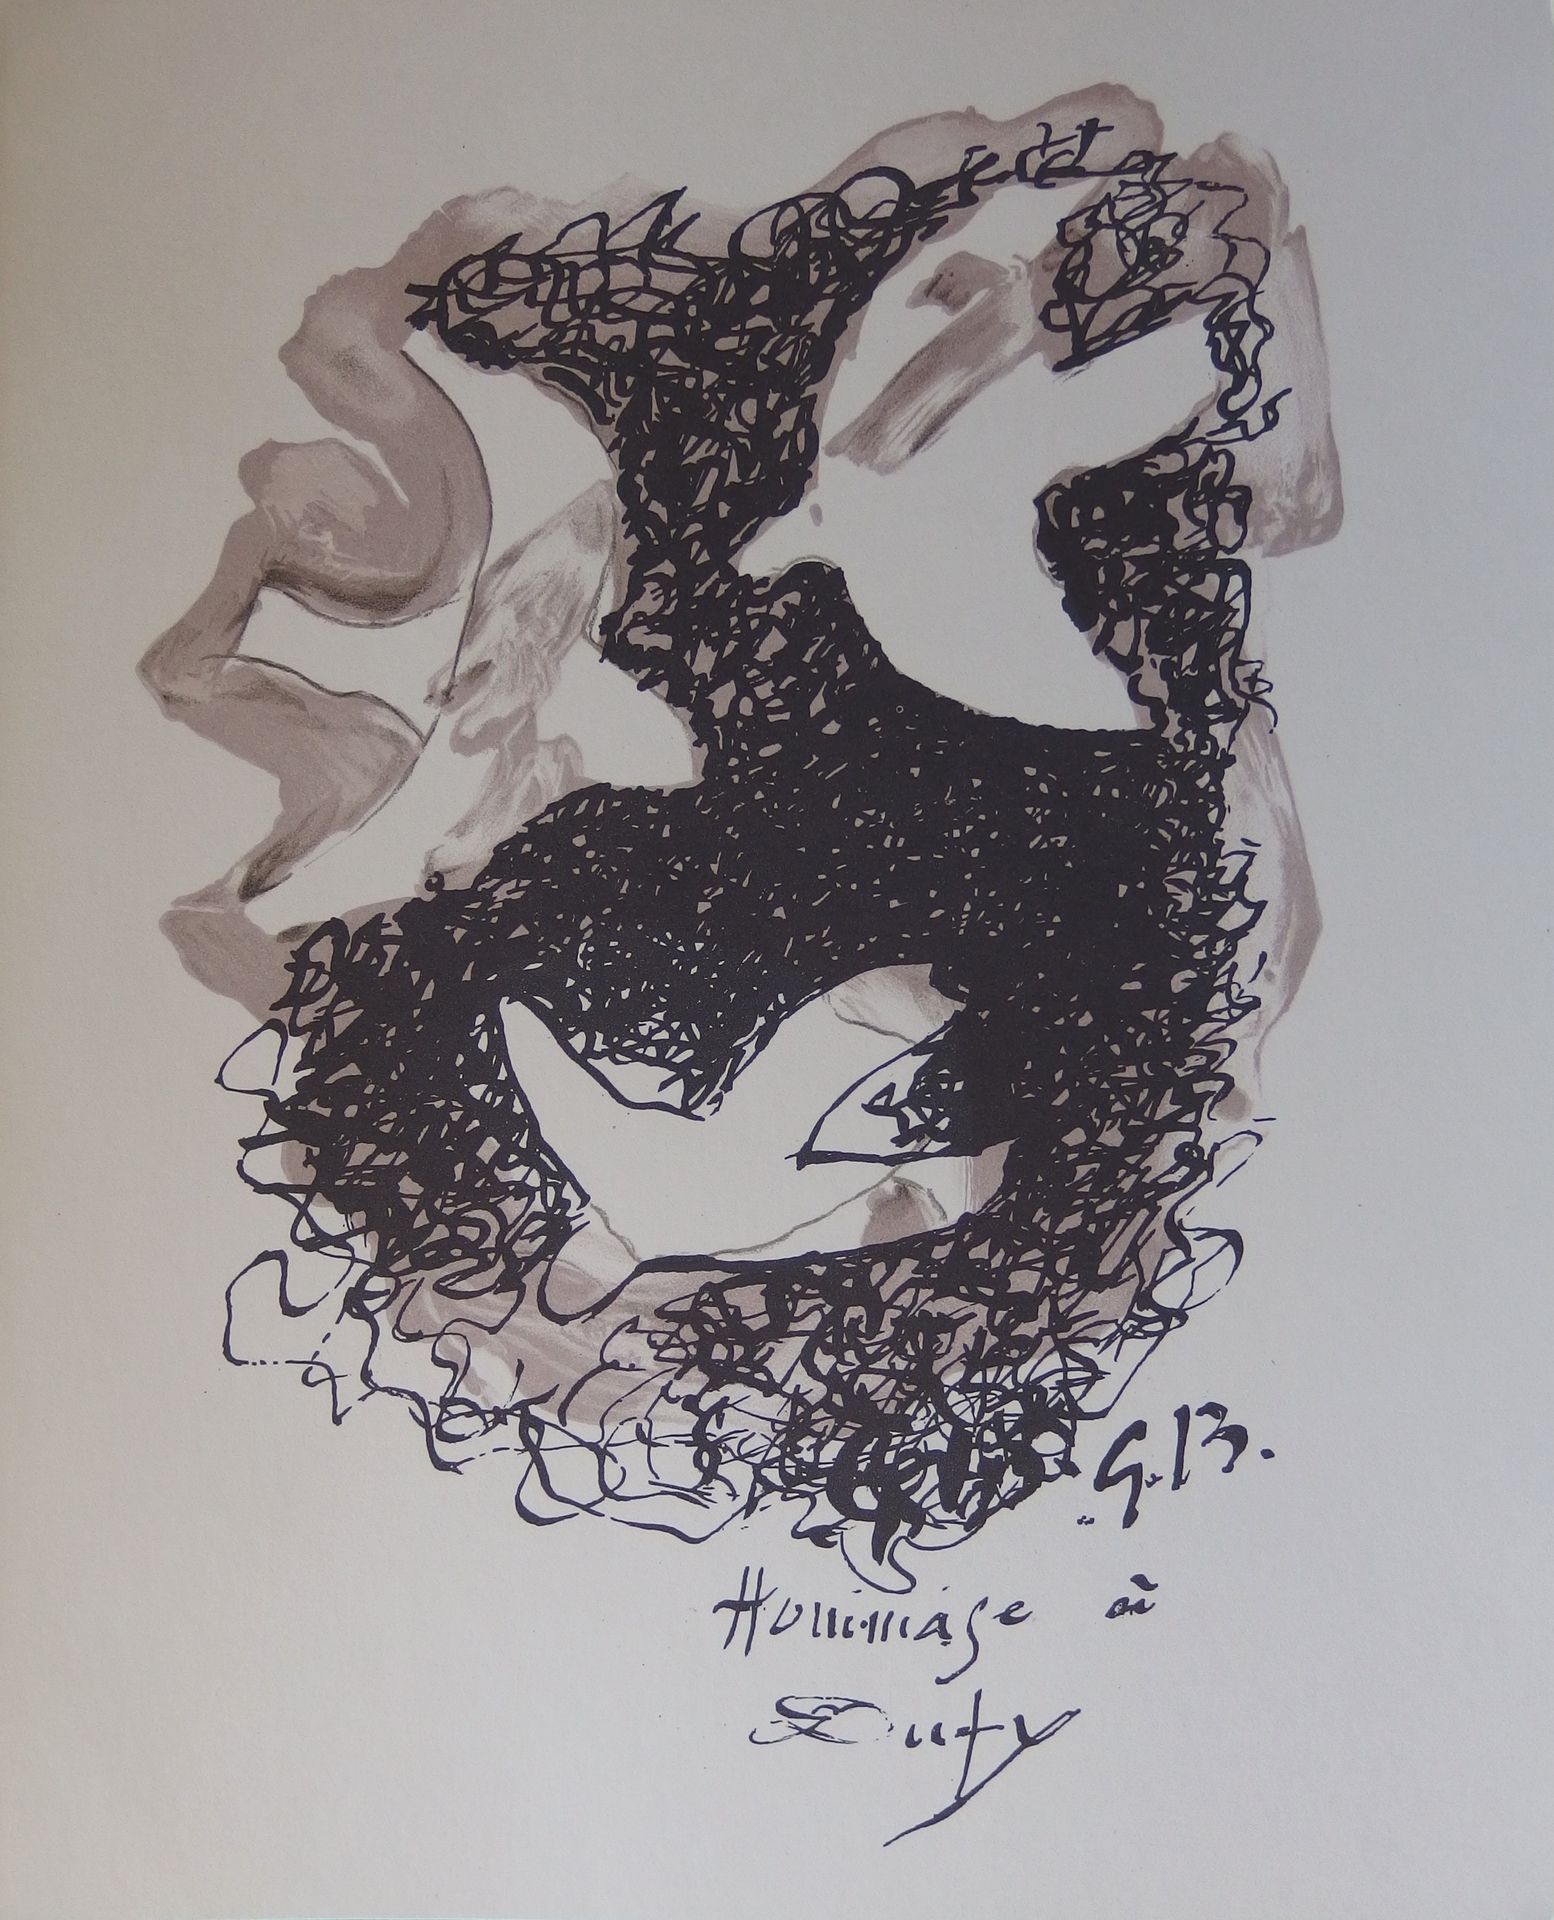 Georges Braque 乔治-布拉克（1882-1963）（后）。

有鸟的构图，1965年

彩色石版画

板块中的签名

牛皮纸上 30 x 24 厘&hellip;